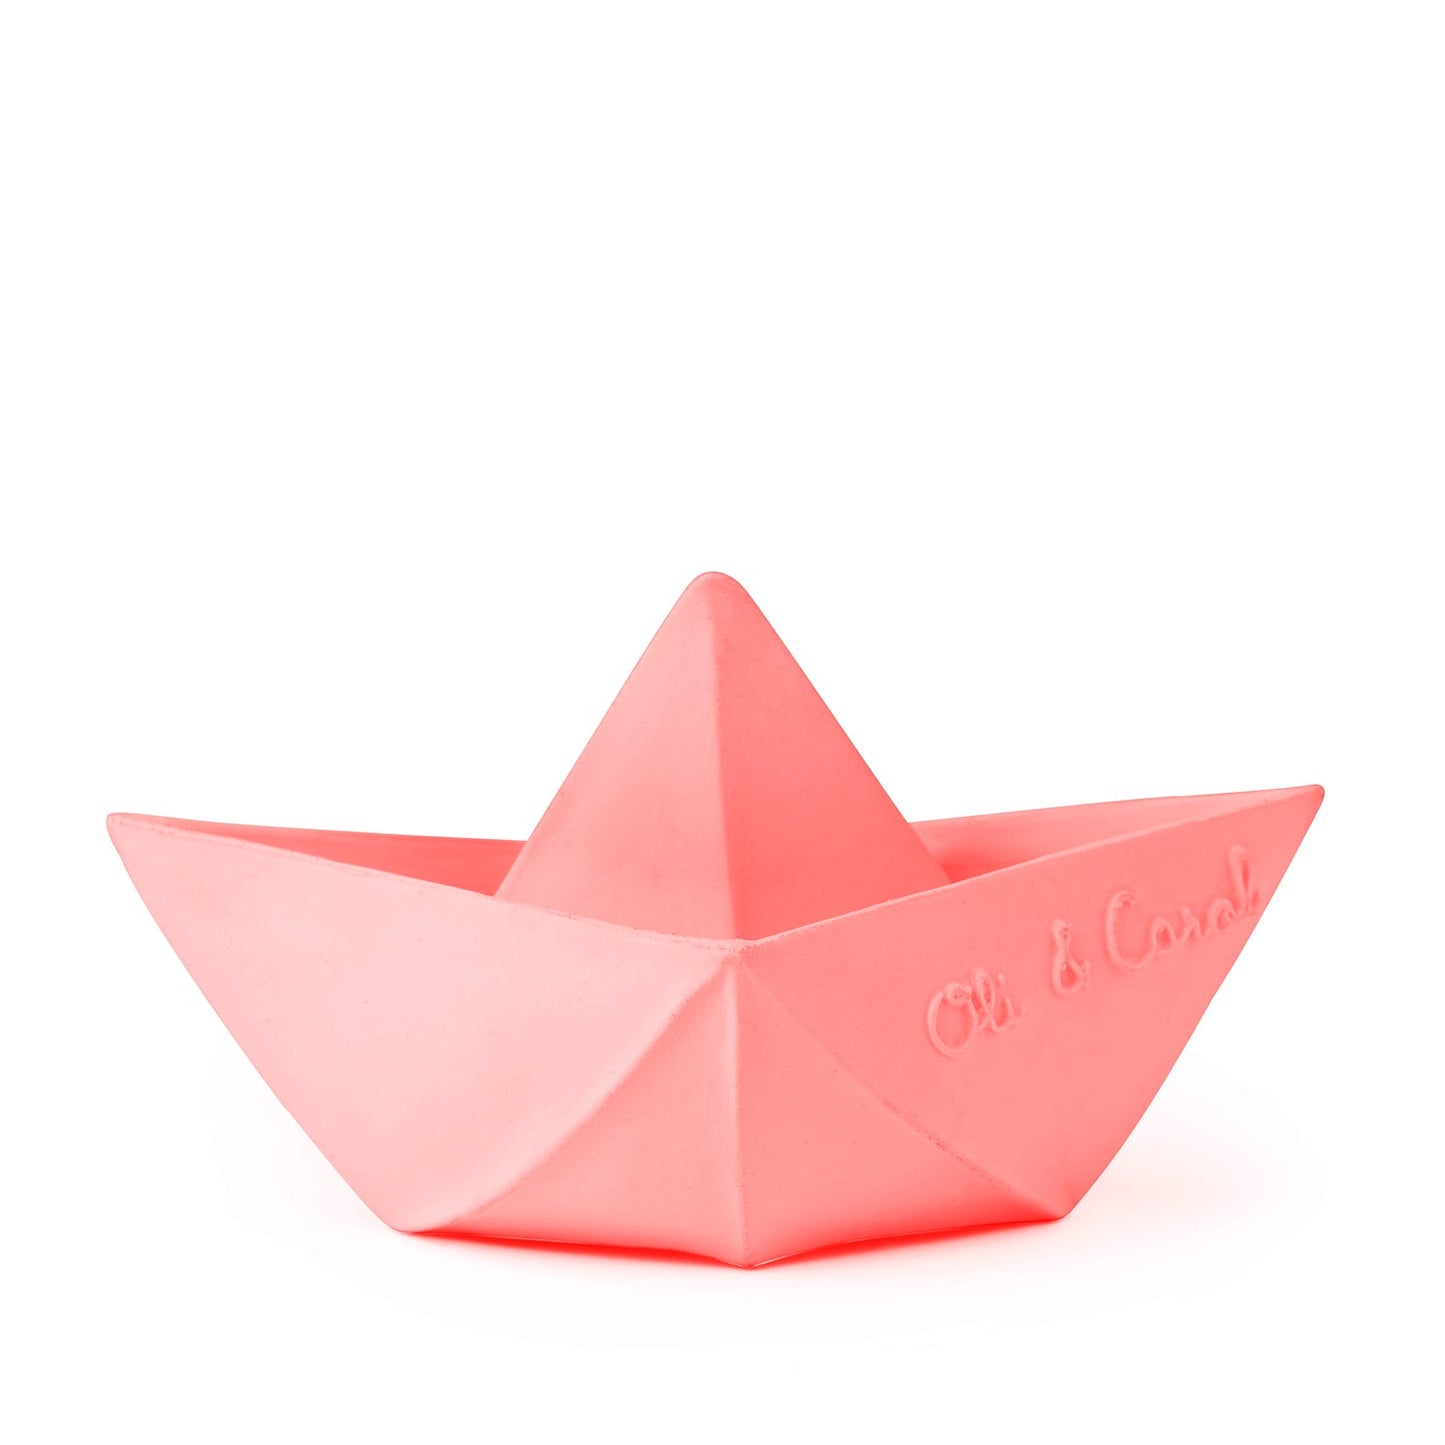 Oli & Carol Origami Boat Teether